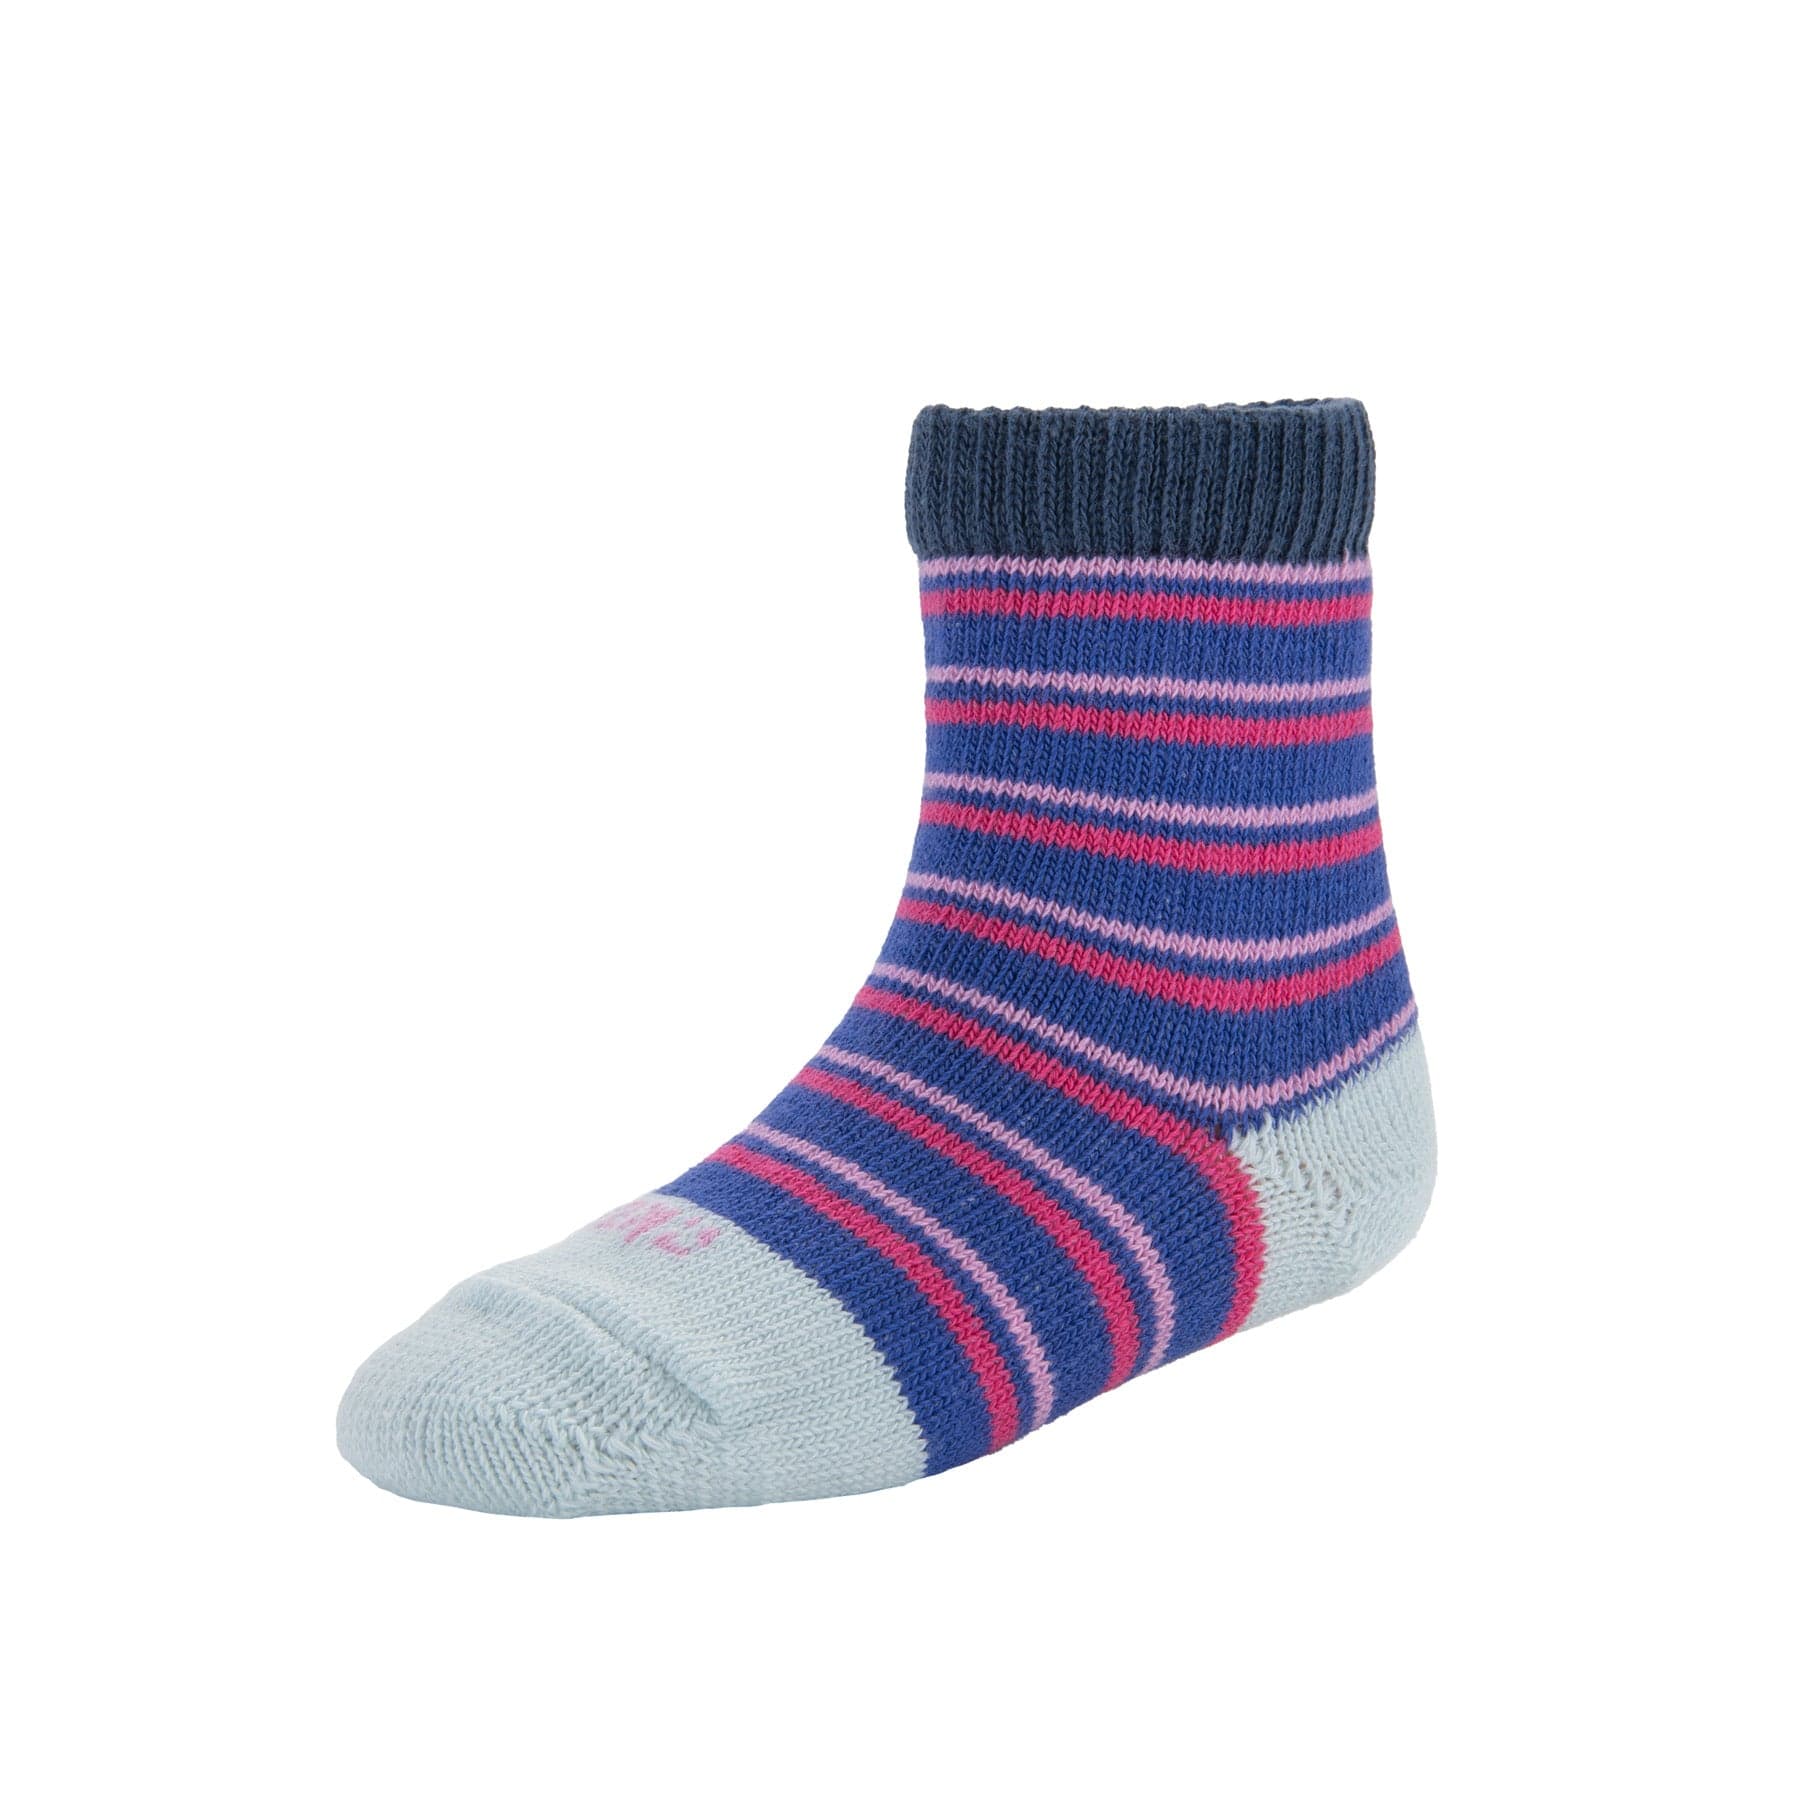 socks Kids - Organic zkano Navy – Crew - Pinstripes Socks Cotton